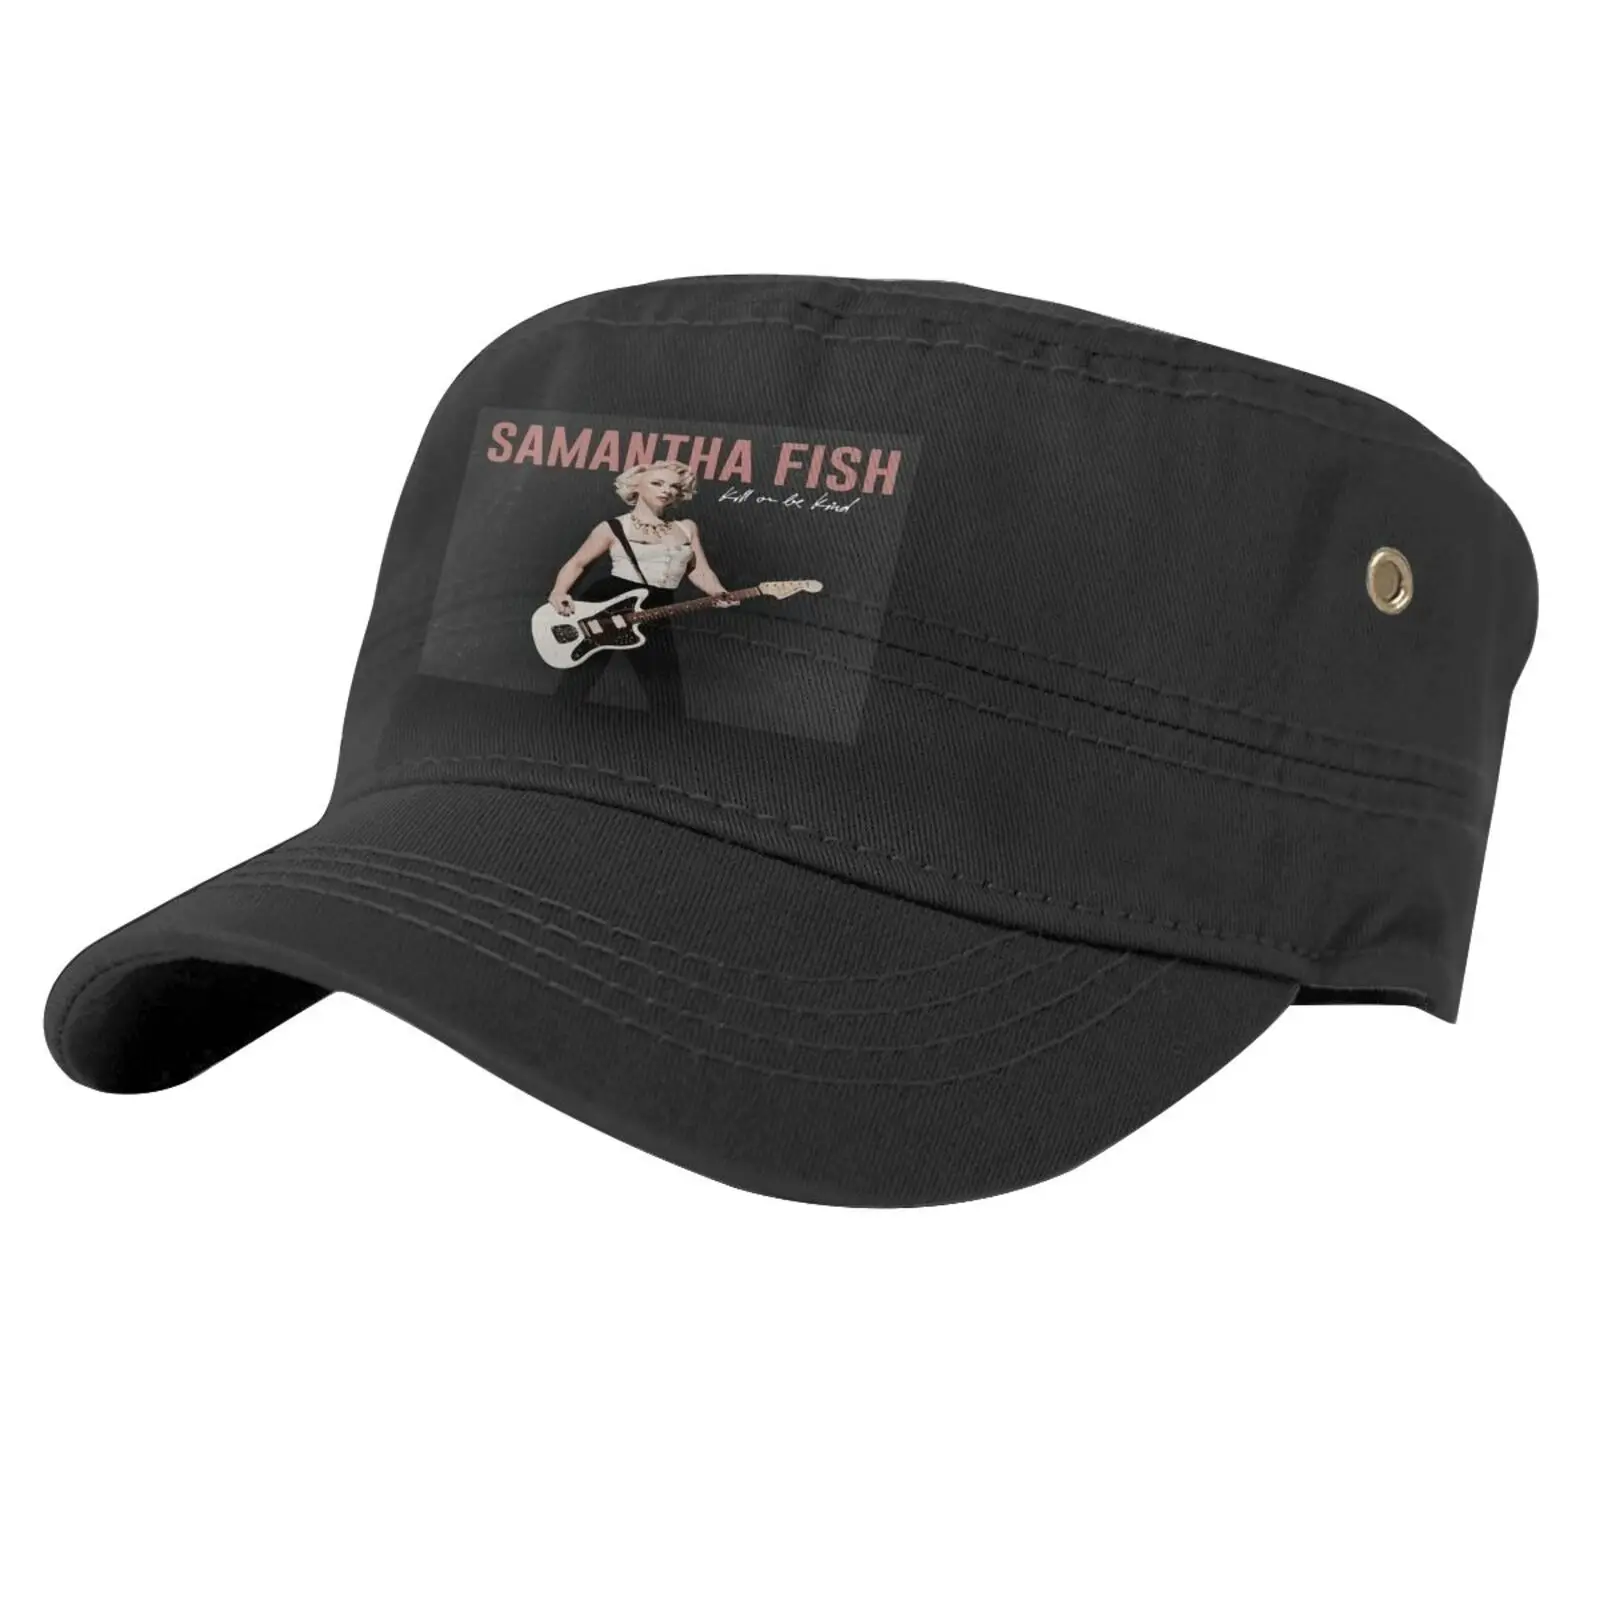 

Мужская кепка Samantha Fish Kill Or Be Kind, мужская шапка, вязаная Балаклава, мужские береты, бейсболка, Пляжная летняя шапка в стиле хип-хоп